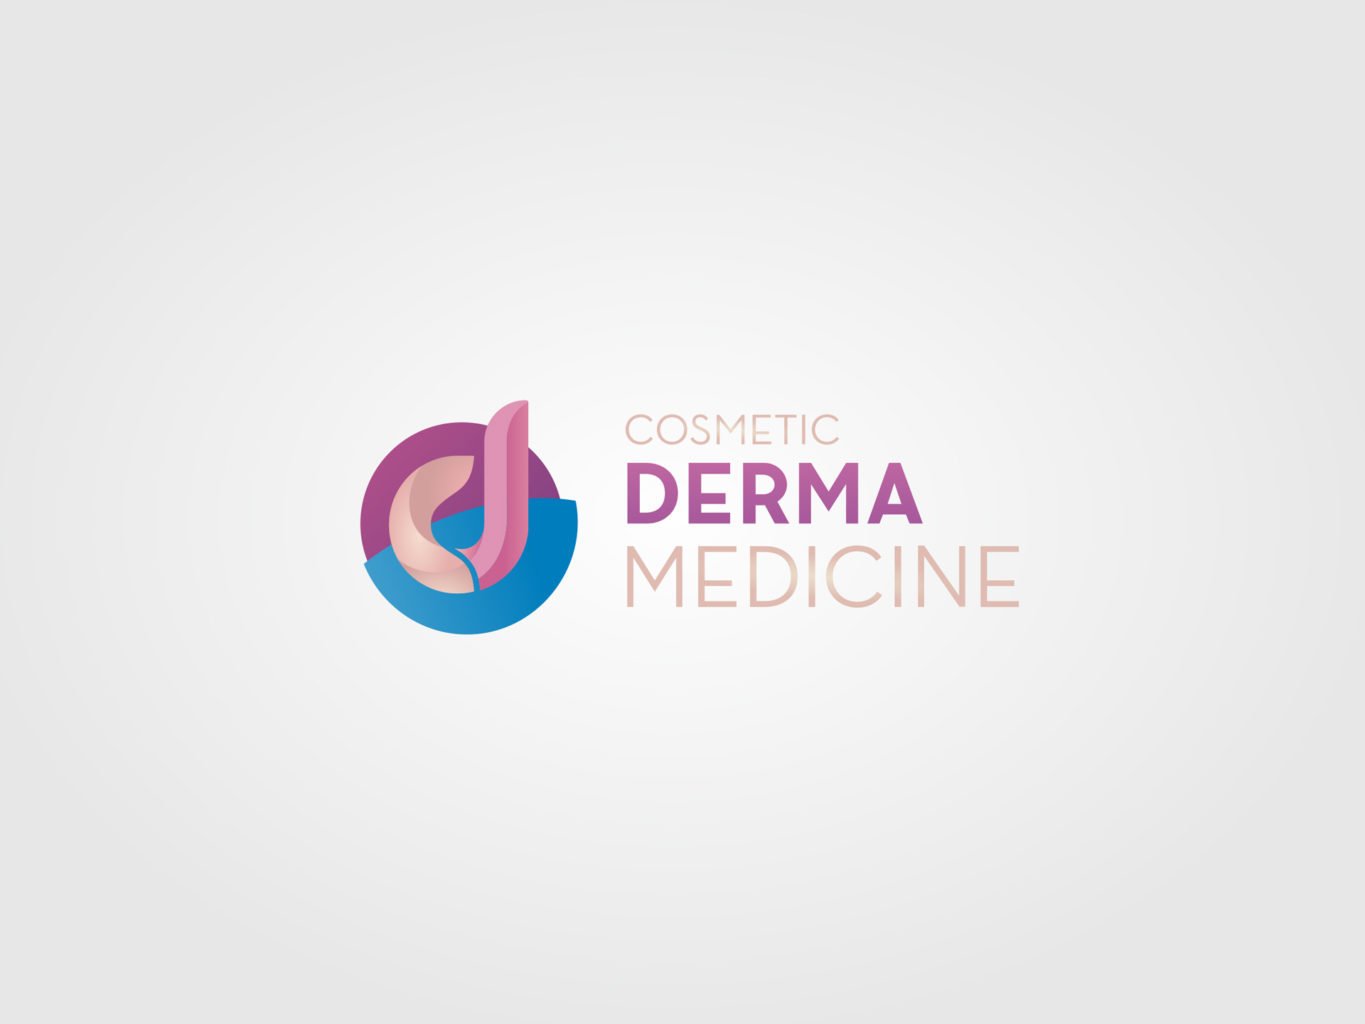 Cosmetic Derma Medicine logo by fiftyeggz